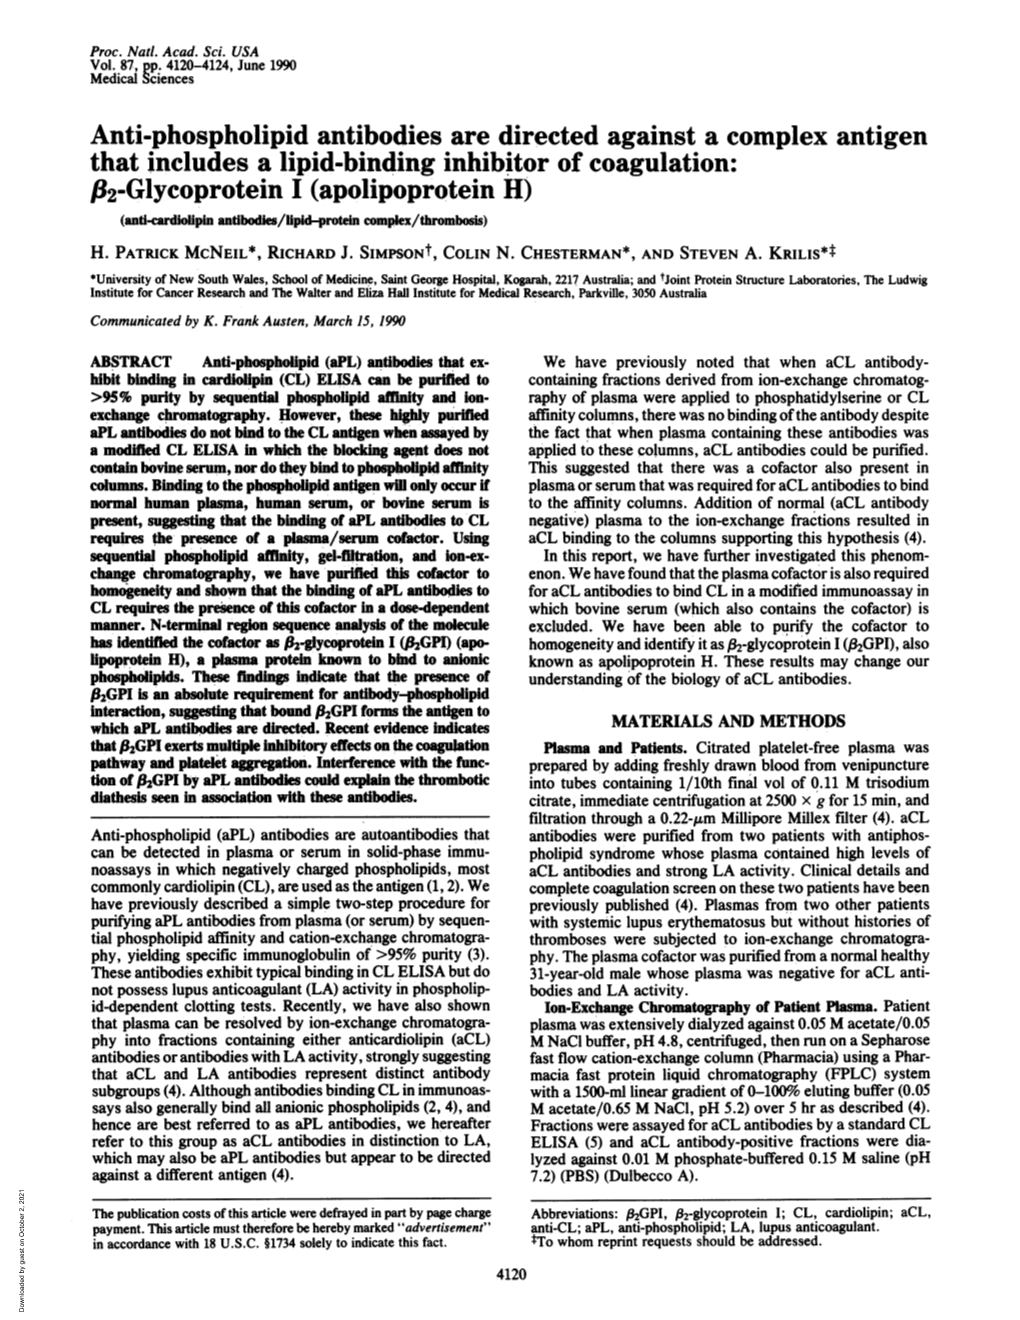 182-Glycoprotein I (Apolipoprotein H) (Anti-Cardiolipin Antibodies/Lipid-Protein Complex/Thrombosis) H